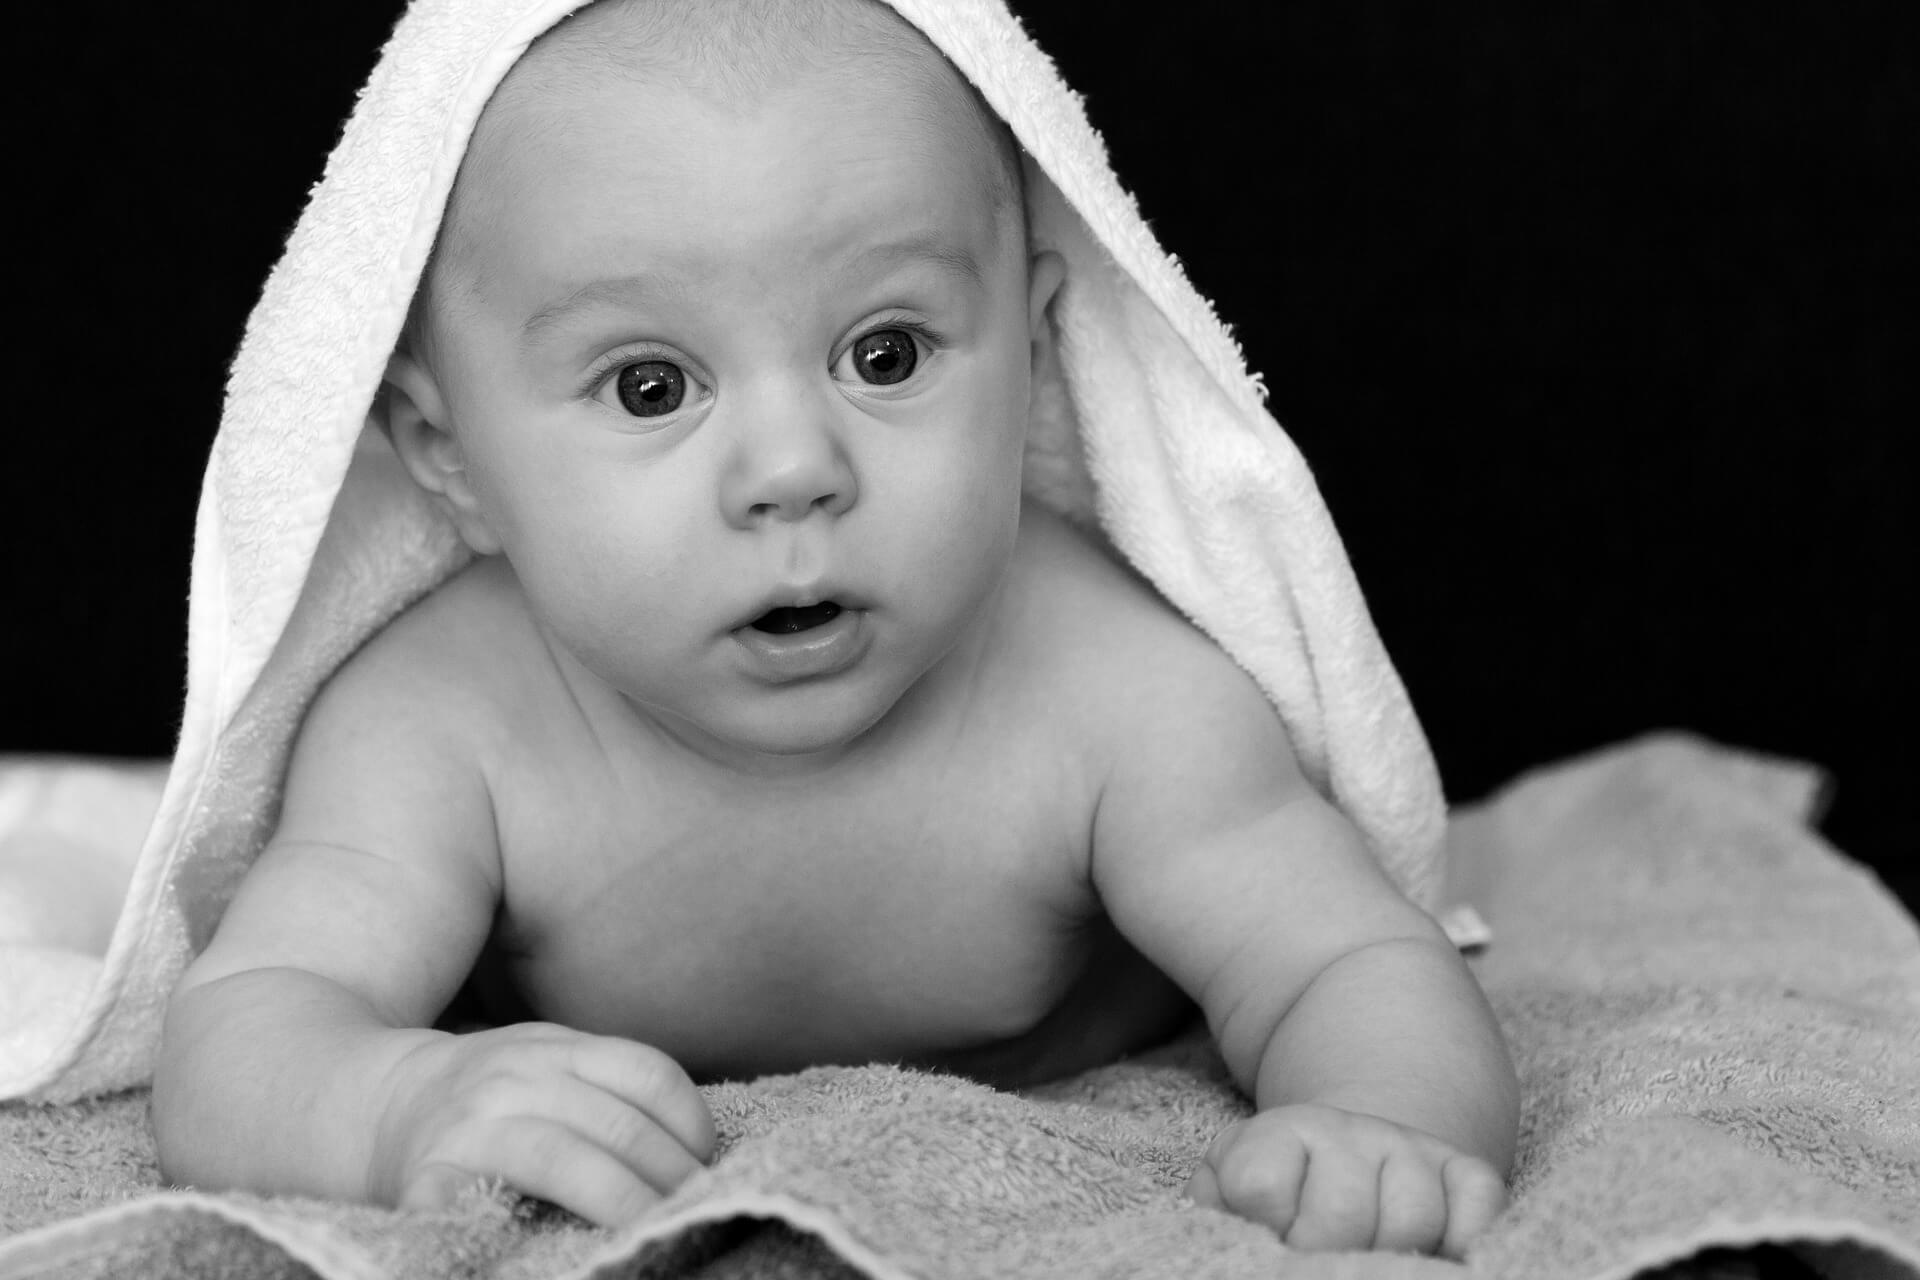 concerns about baby's hygiene